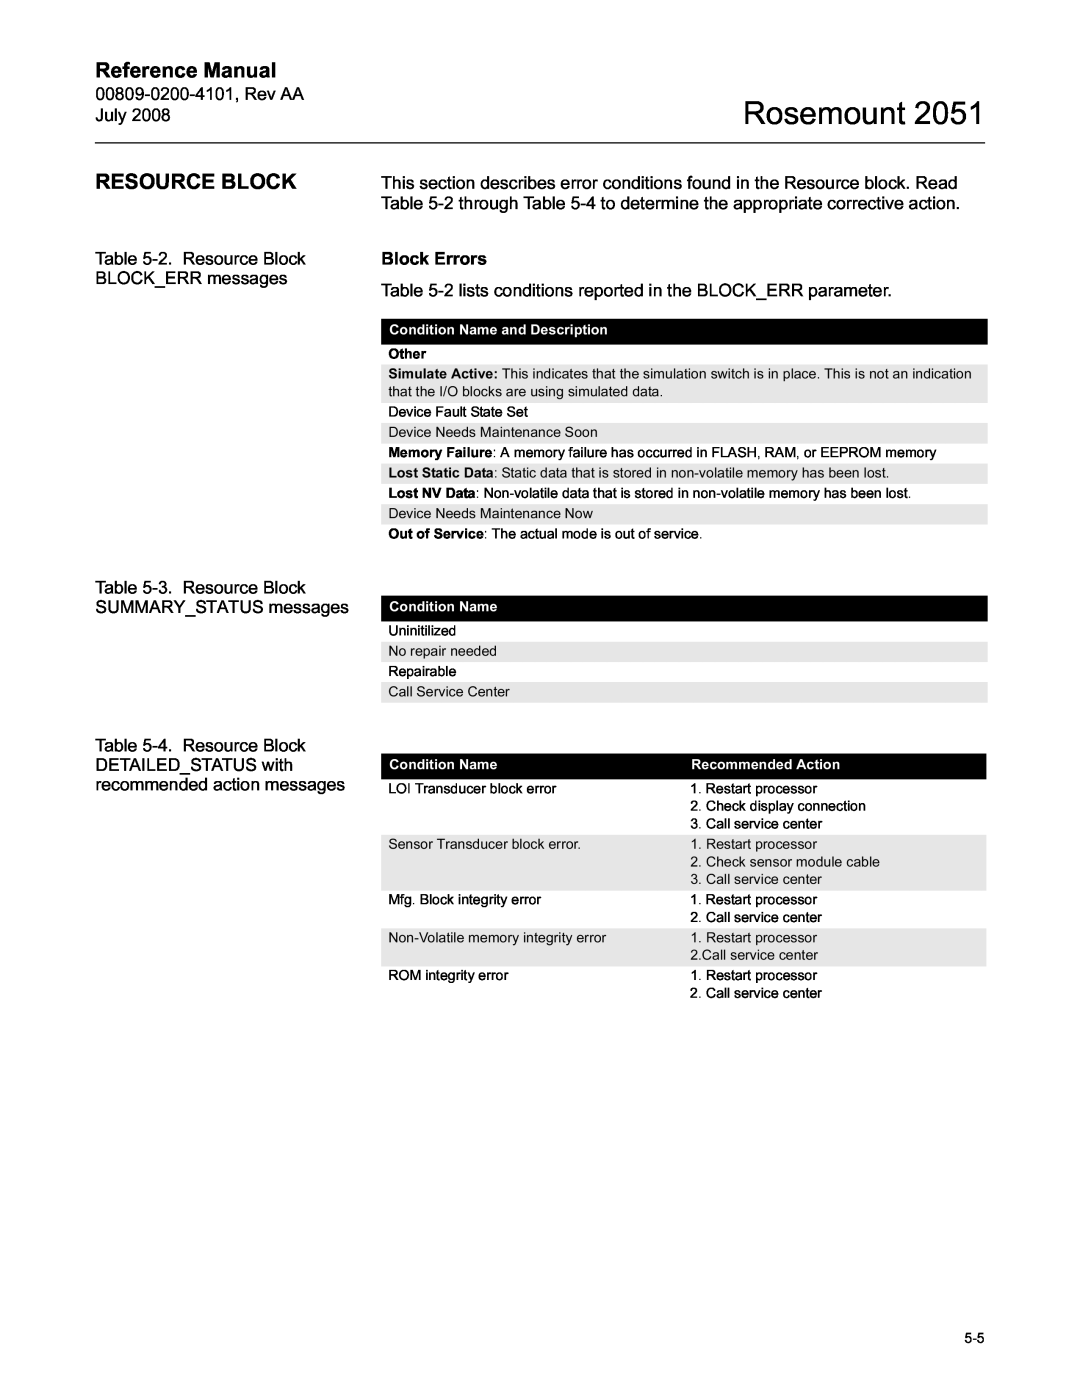 Emerson Process Management 2051 manual Resource Block, Rosemount, Reference Manual 